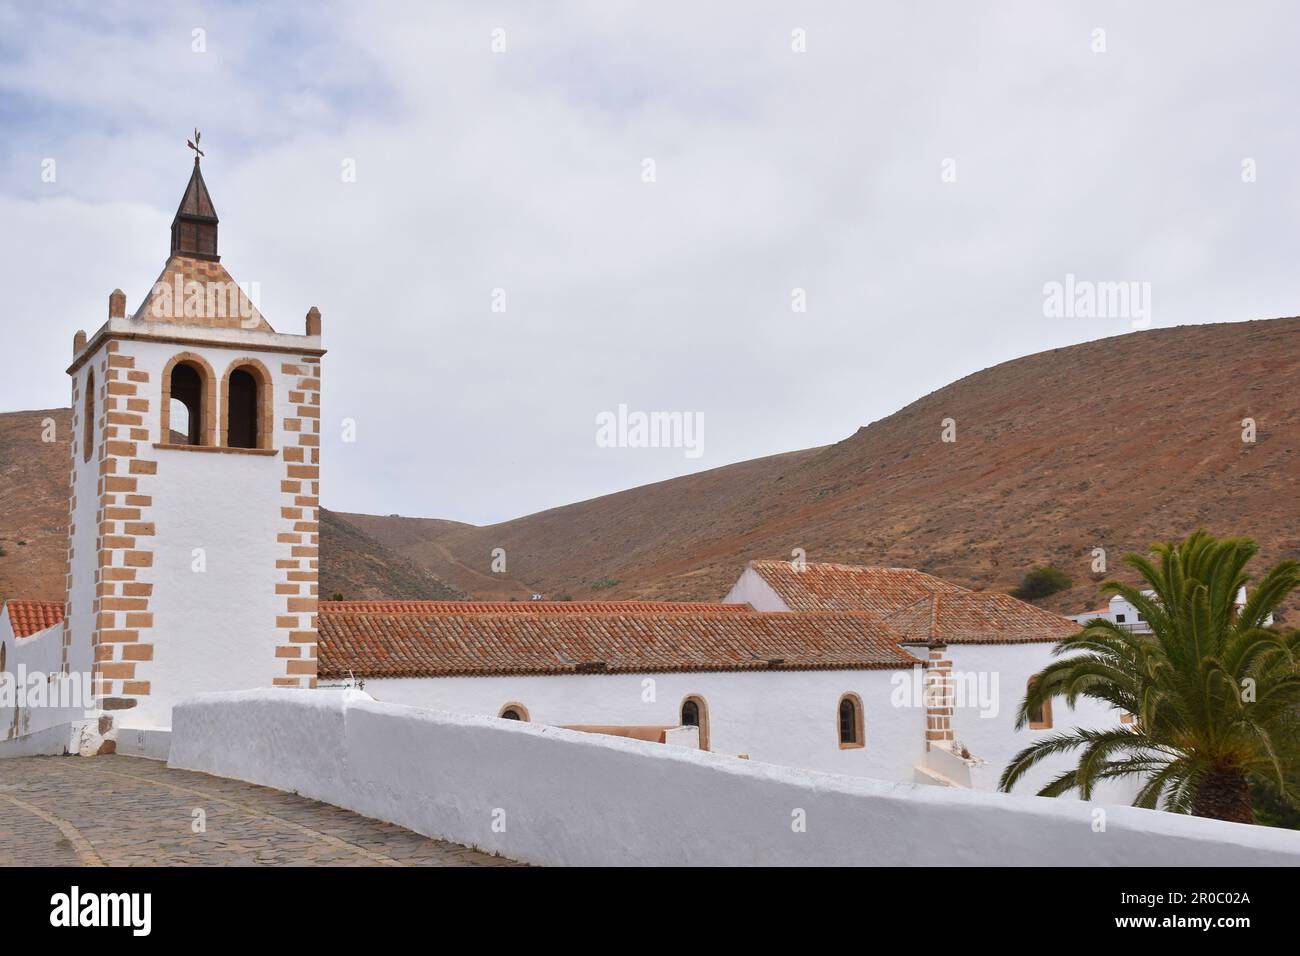 Antica chiesa di Betancuria, Fuerteventura, Isole Canarie, Spagna Foto Stock